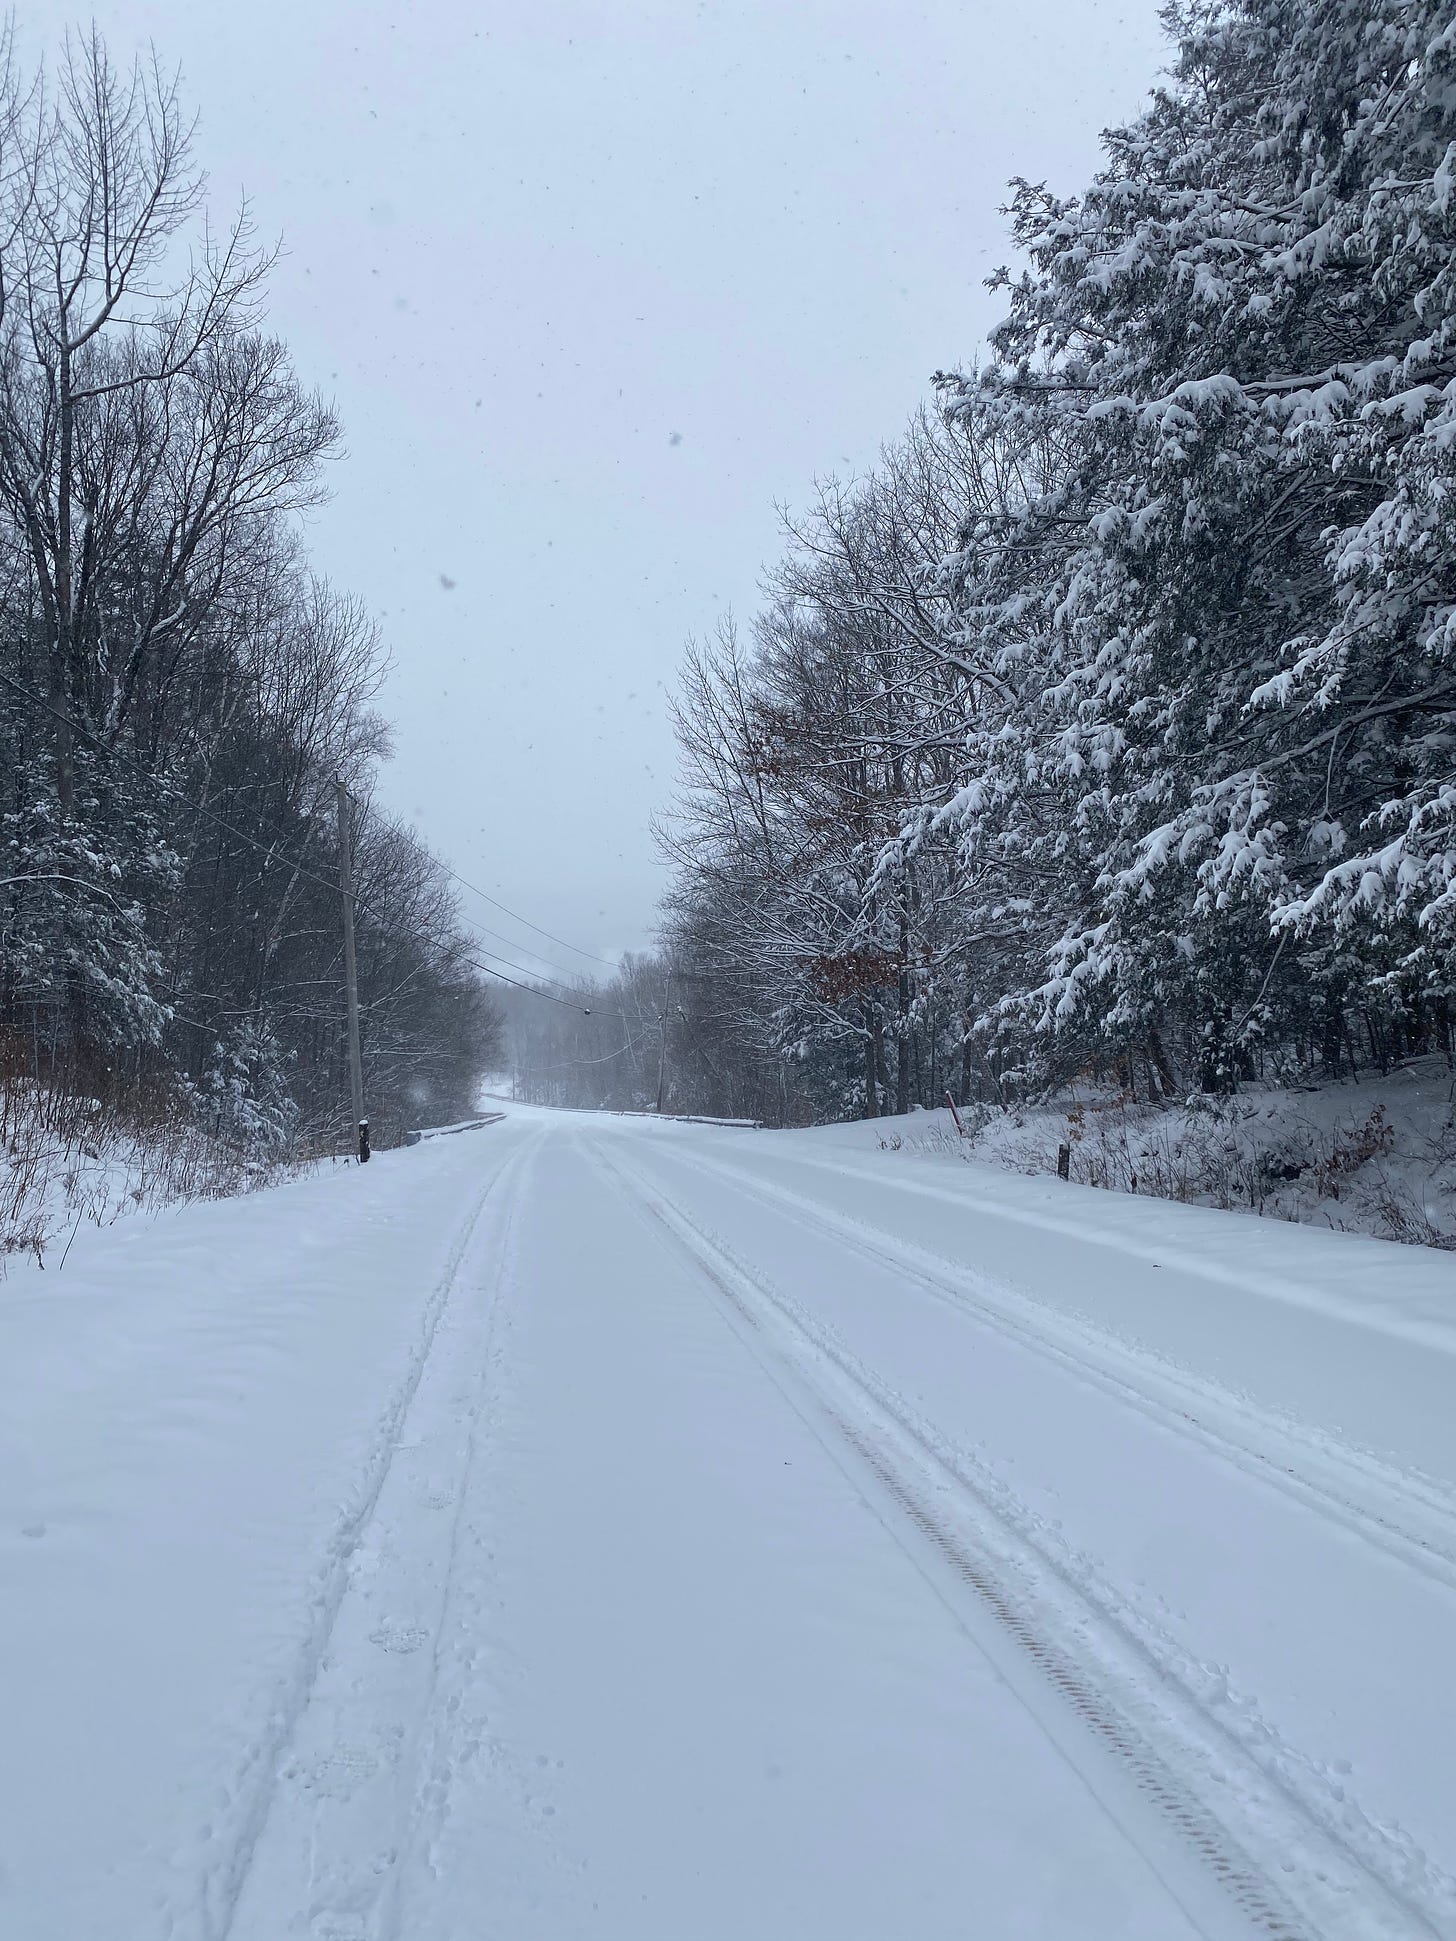 An unplowed snowy road on a grey day.